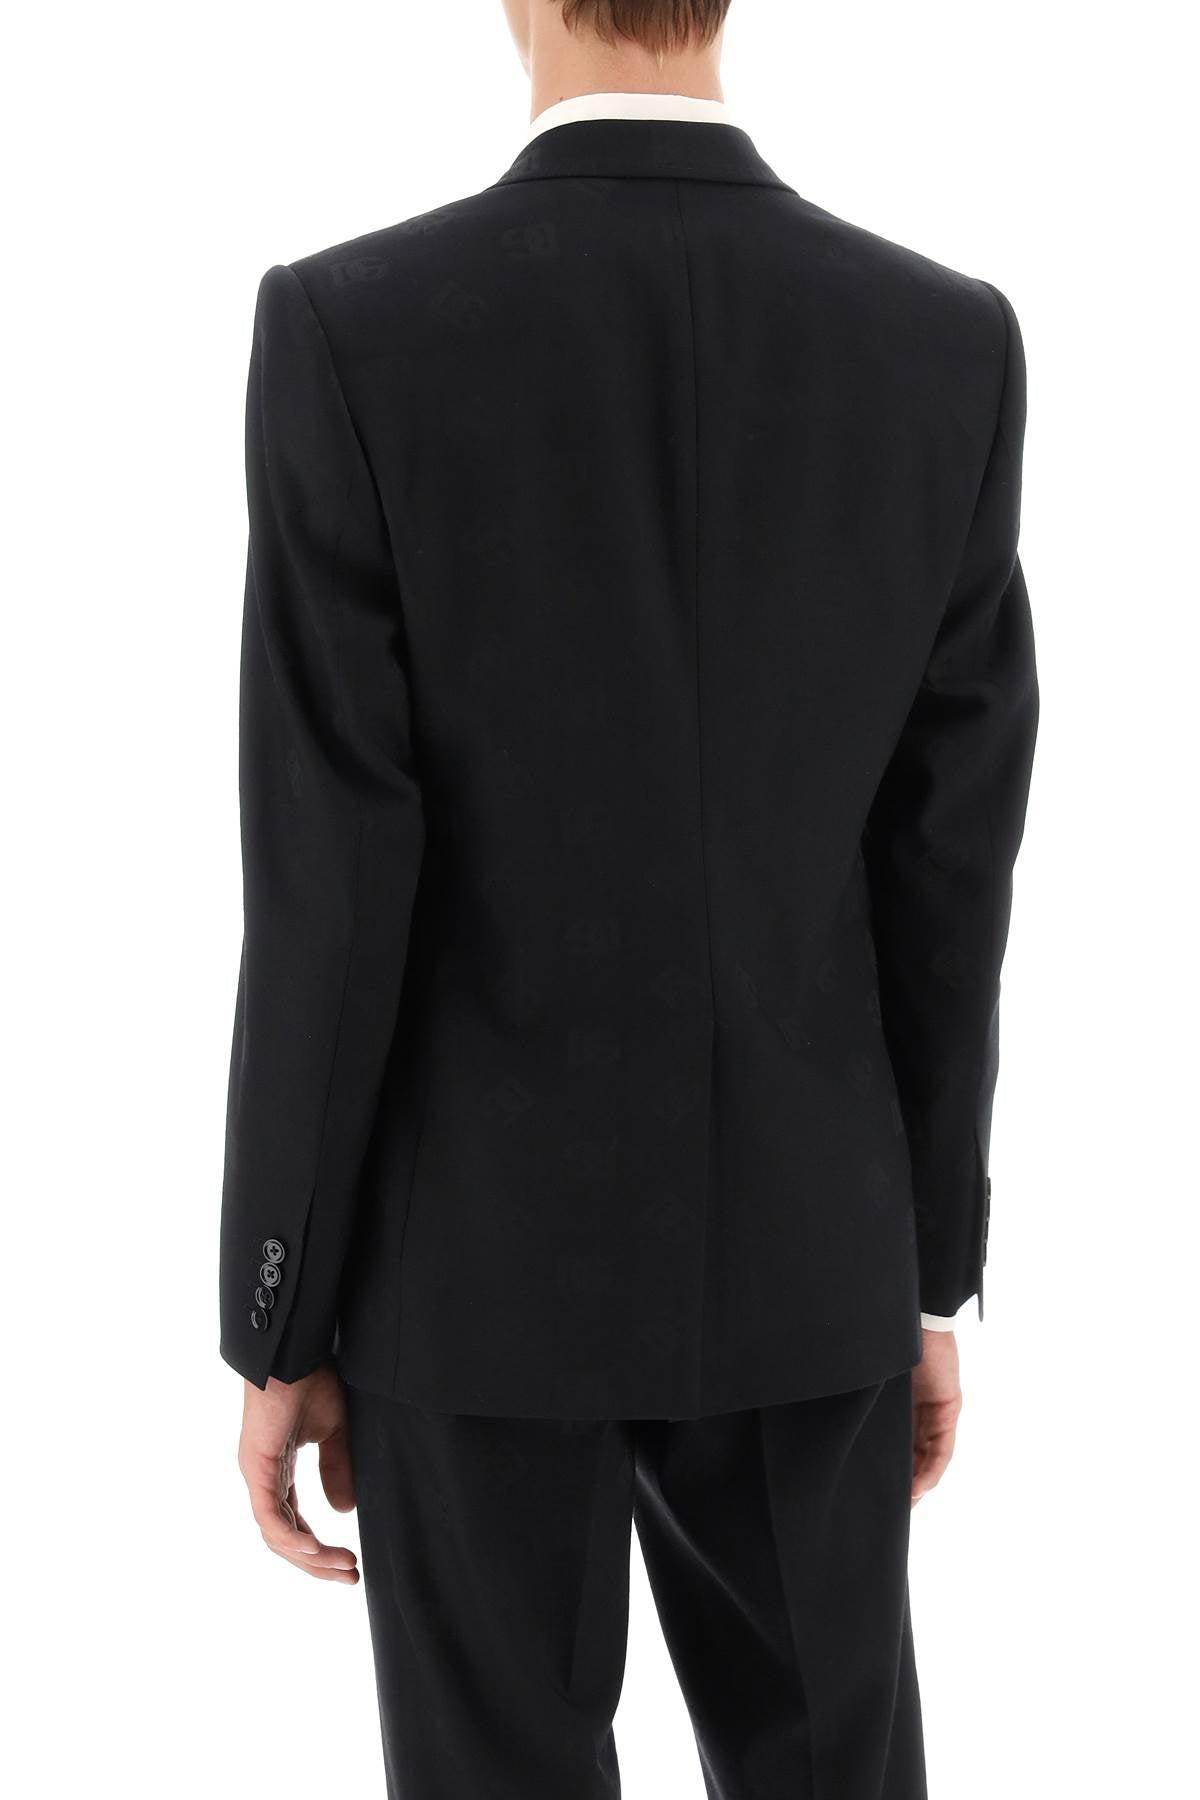 monogram suit jacket